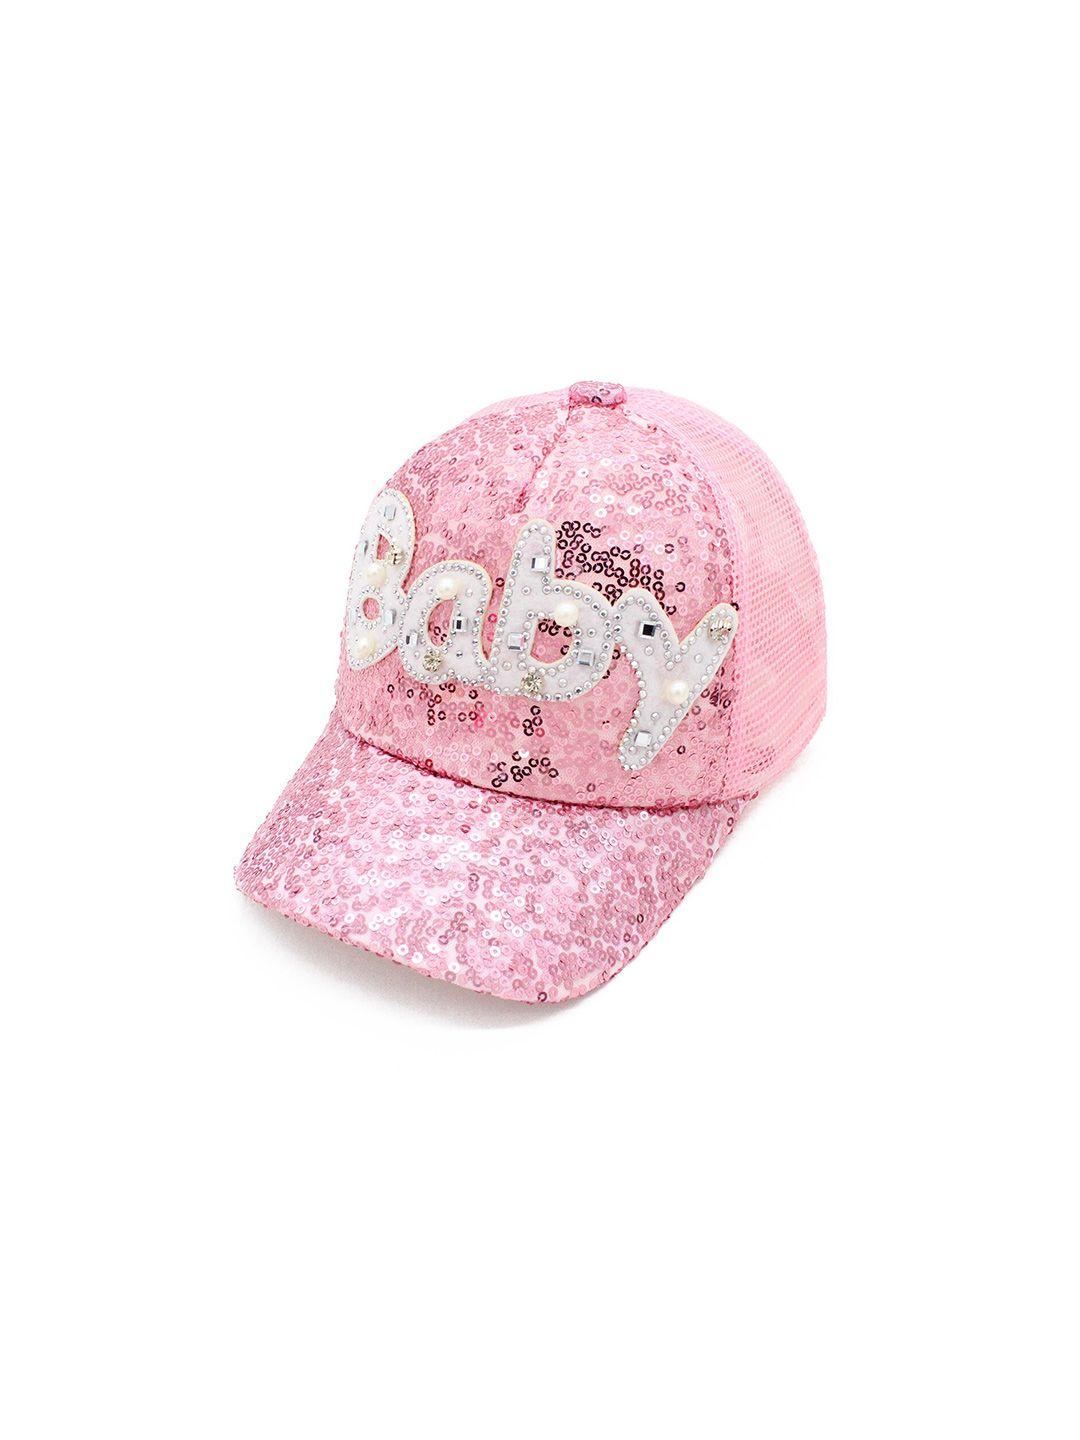 jenna boys embroidered baseball cap